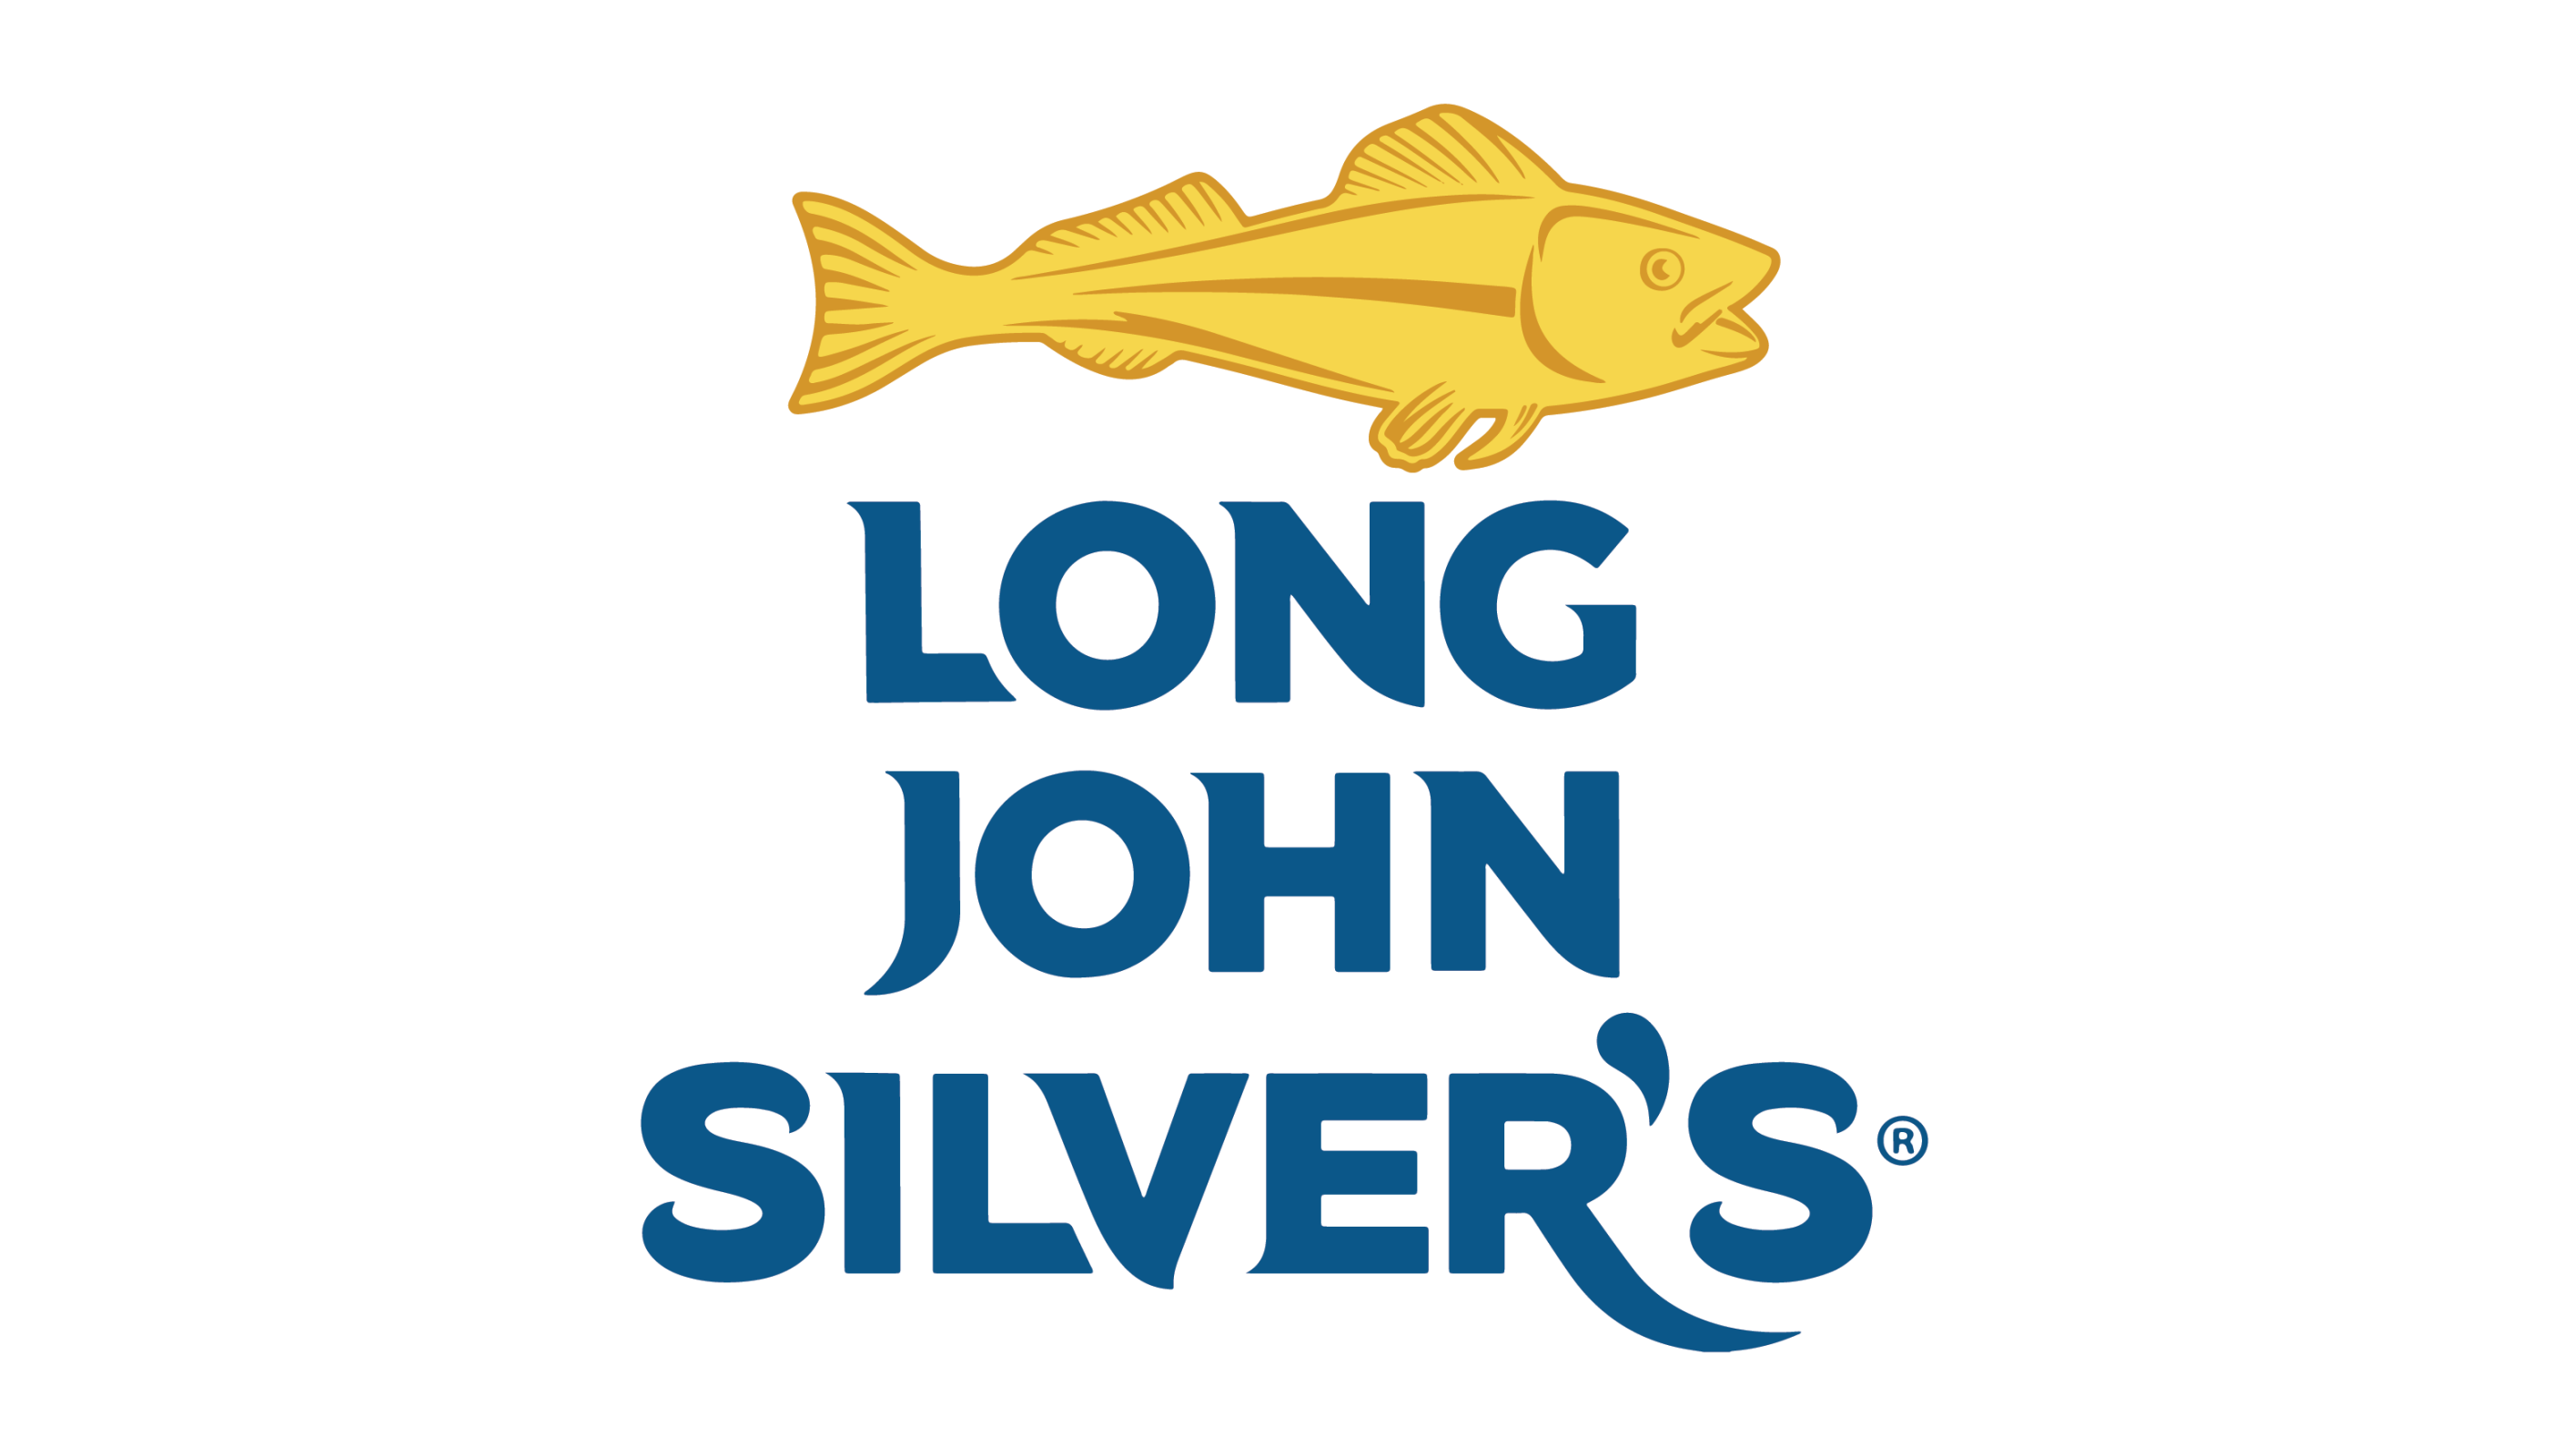 Long John Silvers's Image